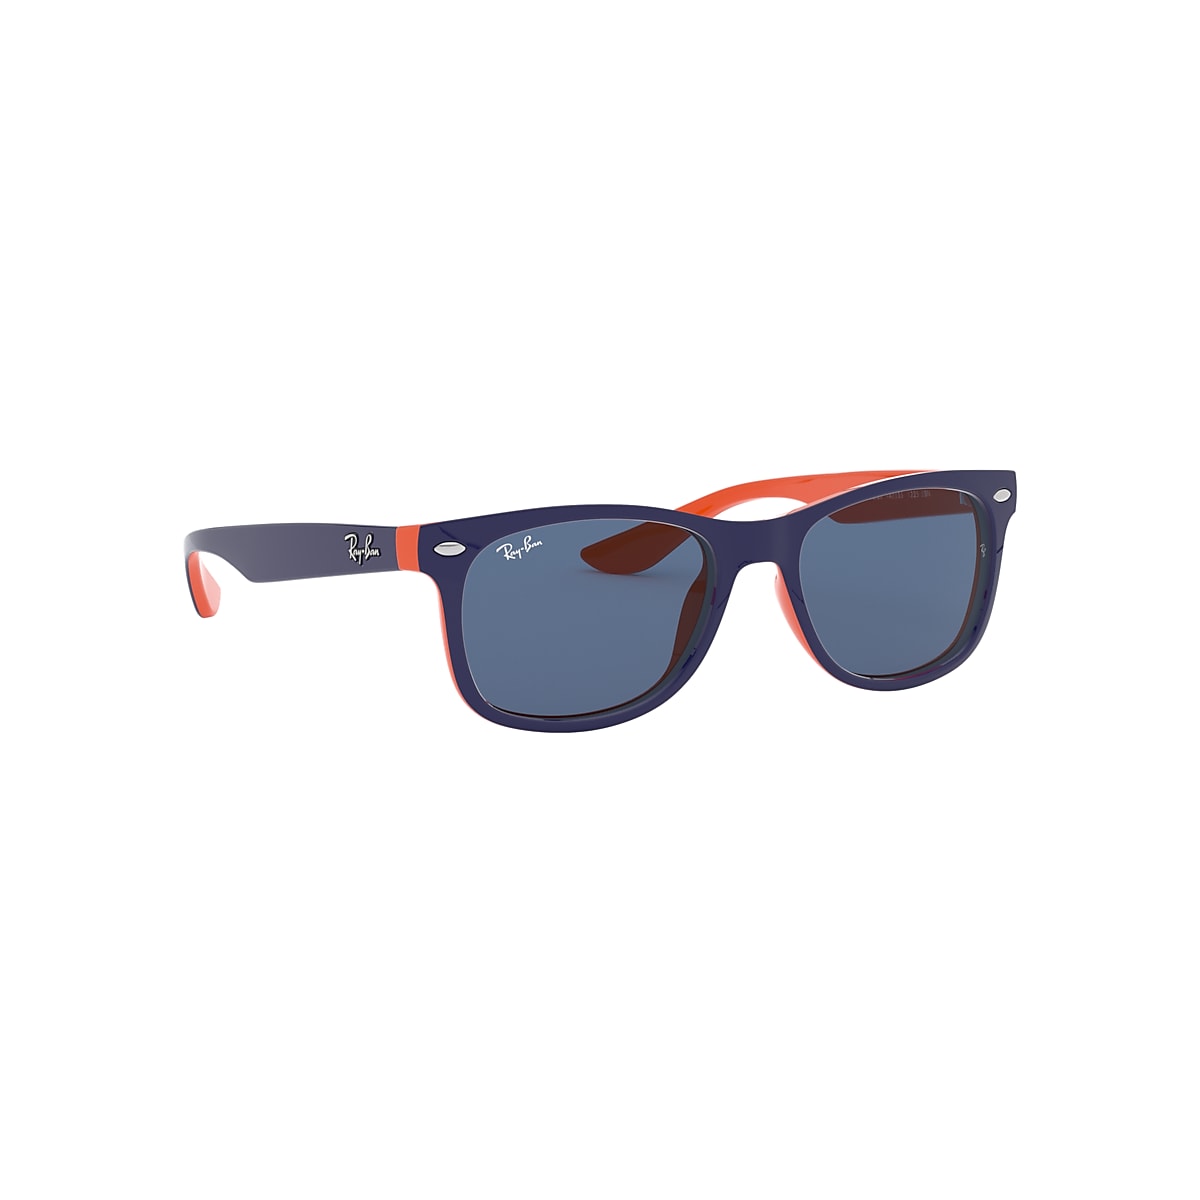 NEW WAYFARER KIDS Sunglasses in Blue On Orange and Blue 